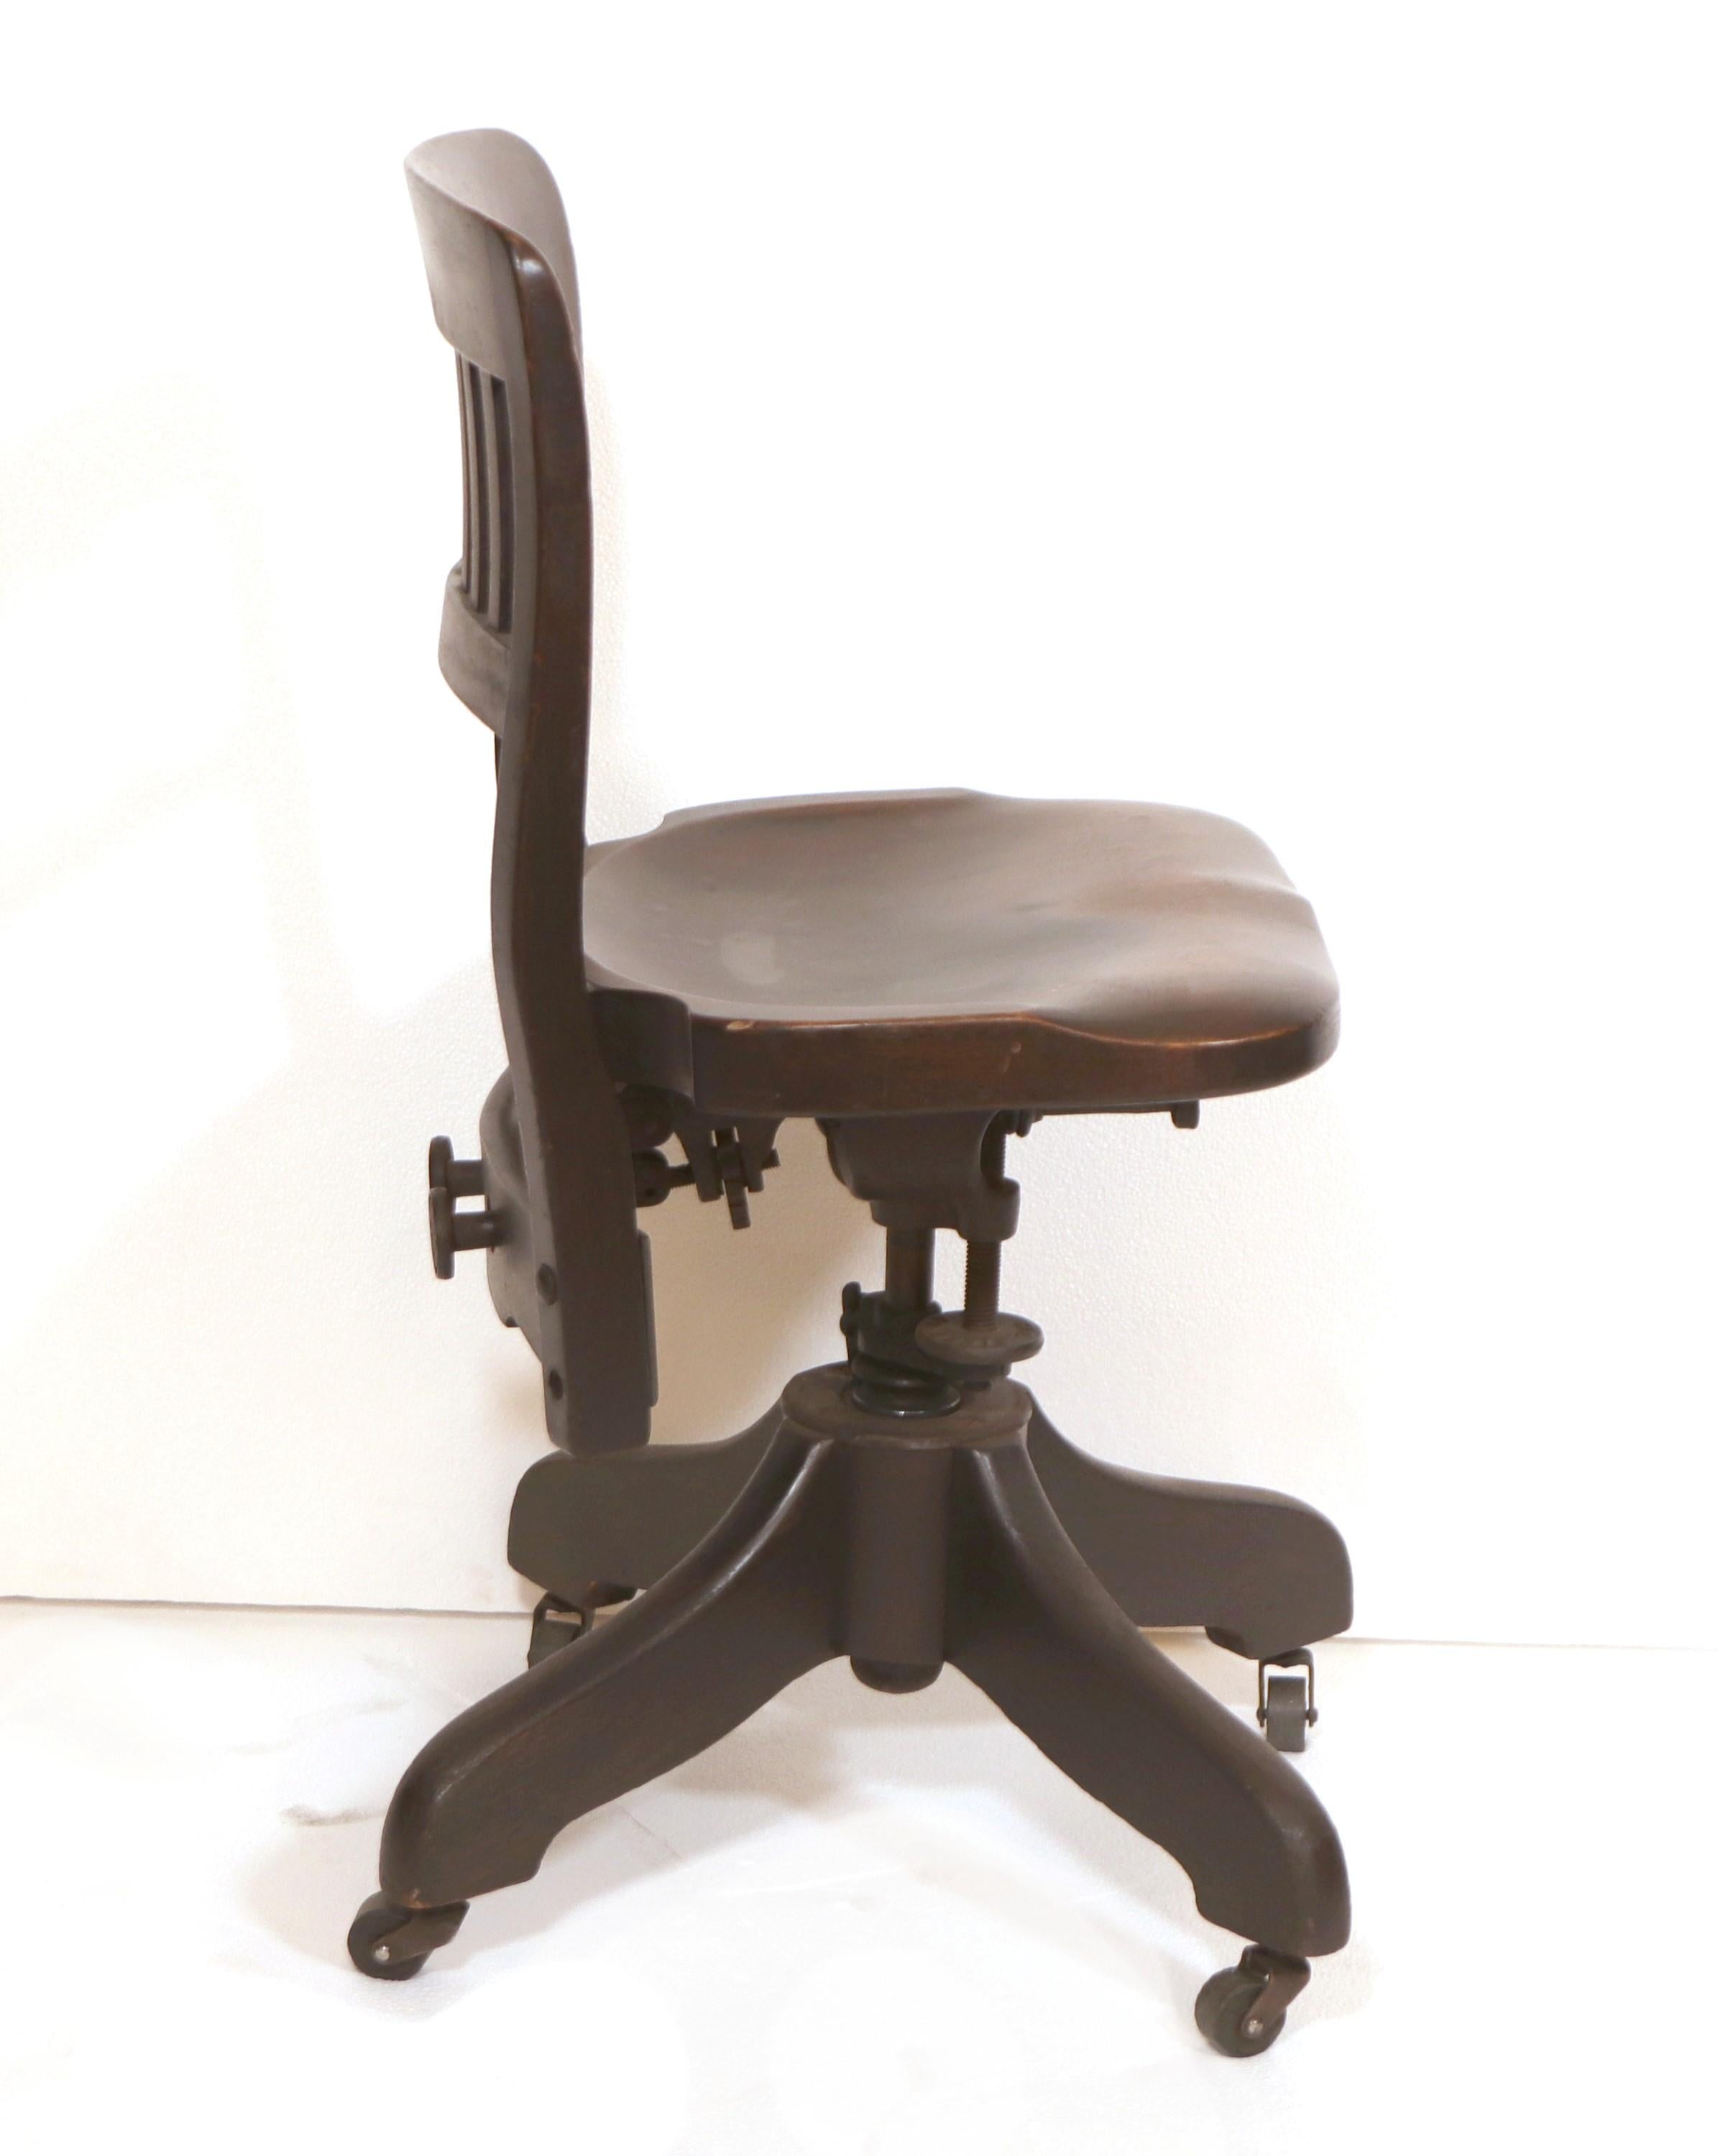 sikes chair